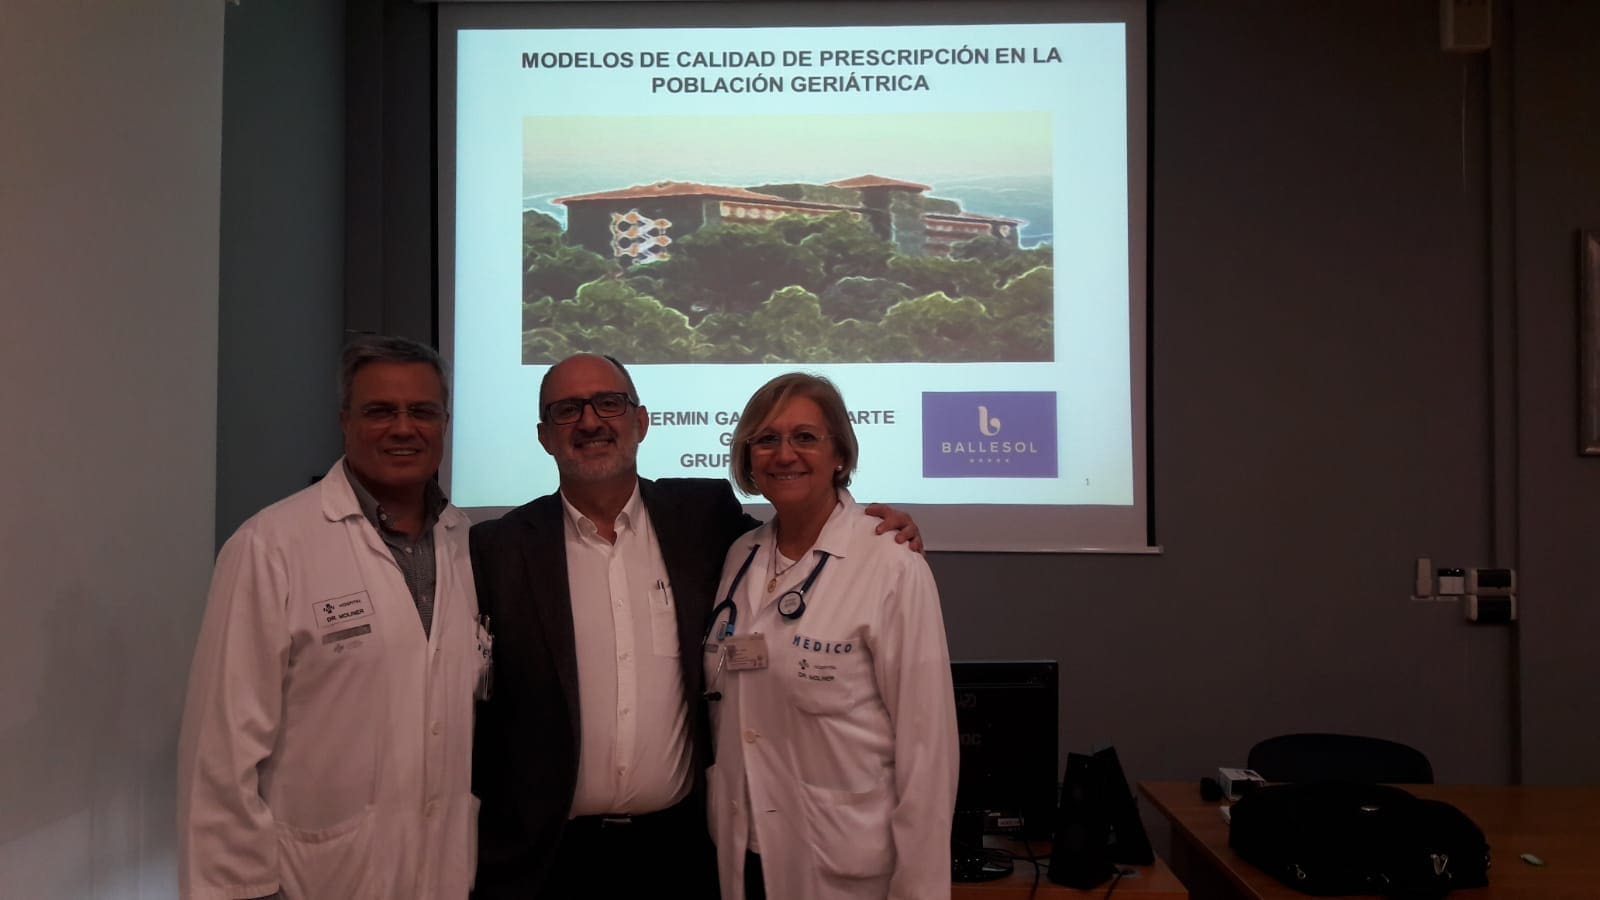 Ballesol sesion clinica Hospital Dr Moliner Valencia